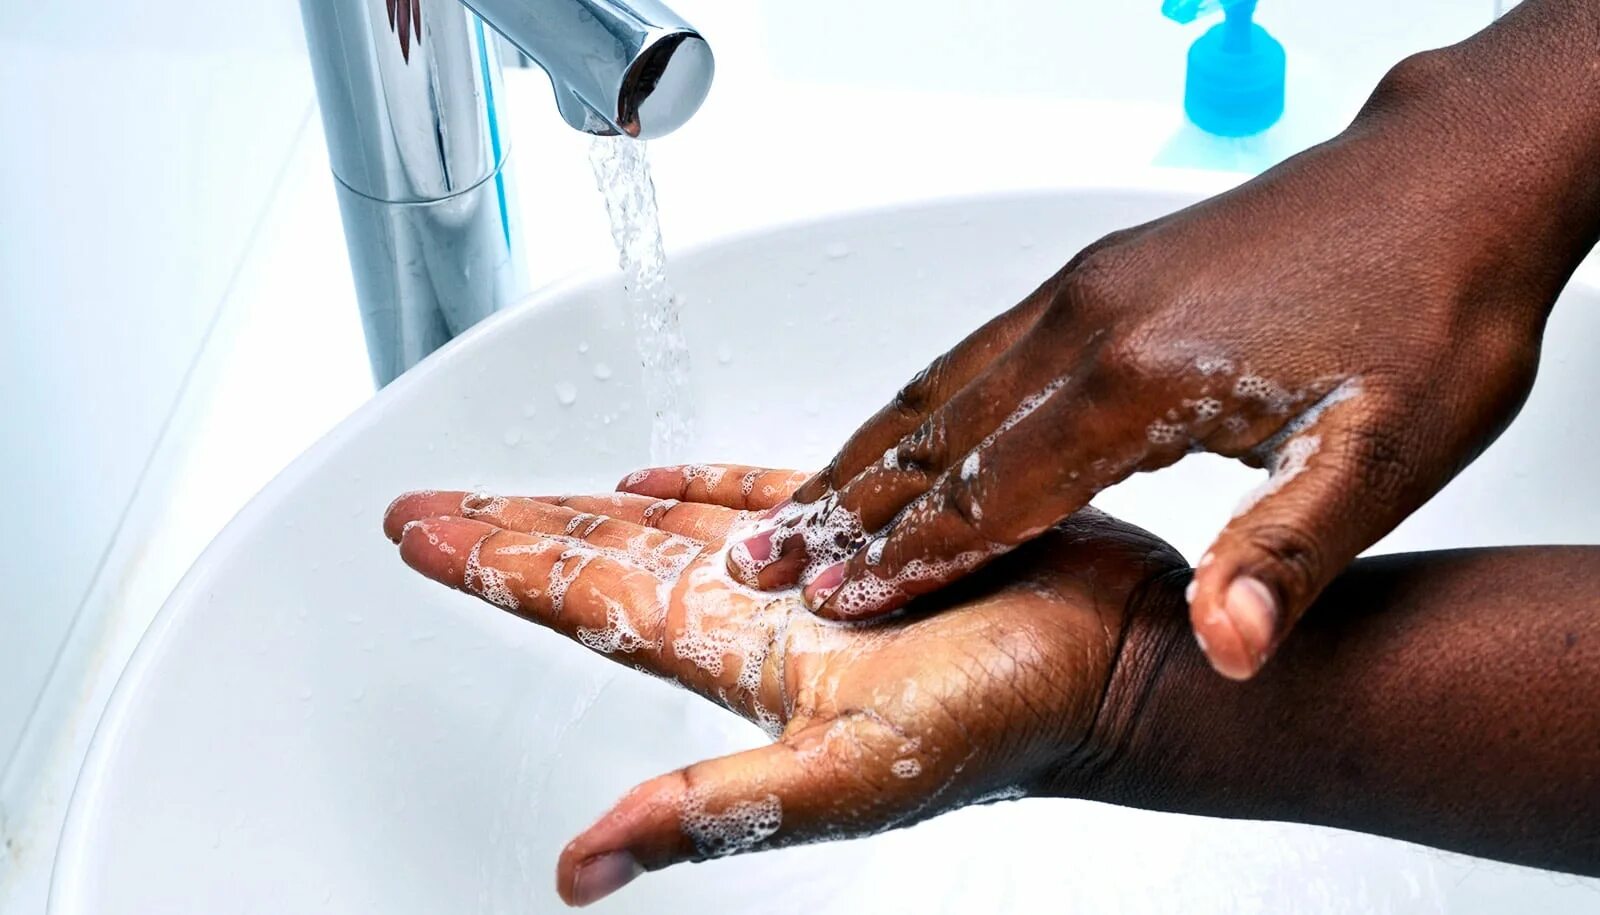 We wash hands. Мытье рук. Гигиена рук. Мыть руки. Частое мытье рук.